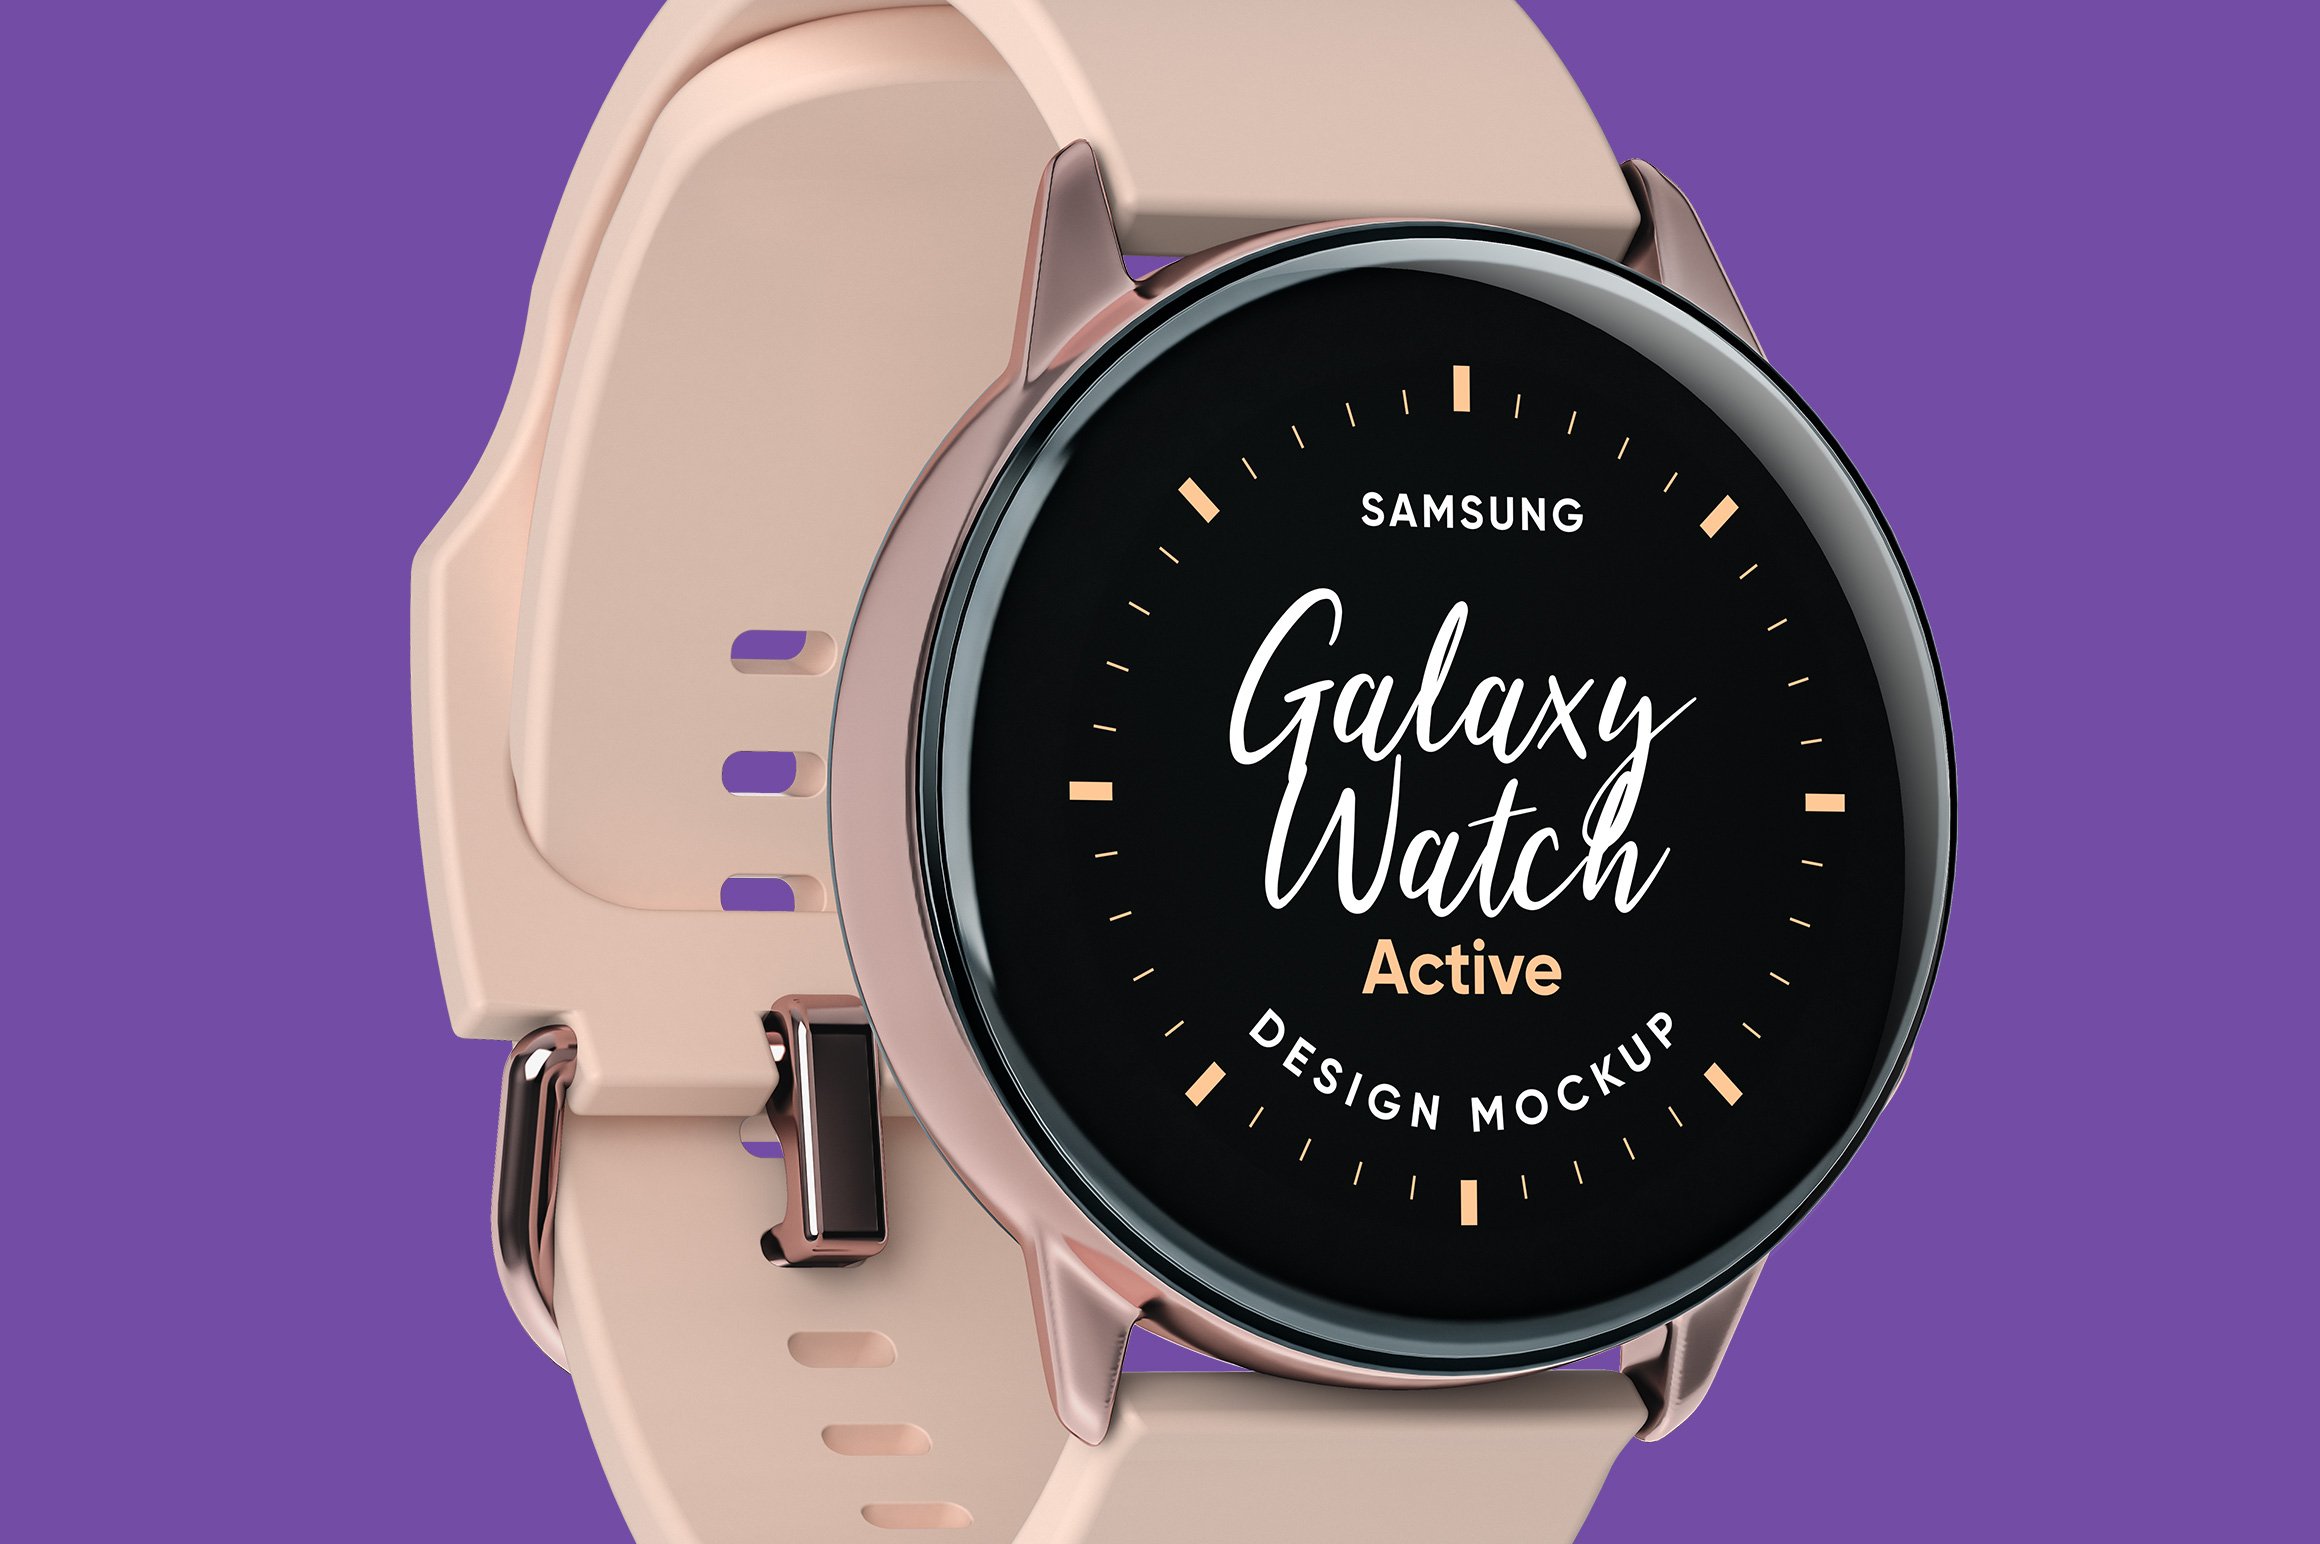 Samsung Galaxy Watch Design Mockup preview image.